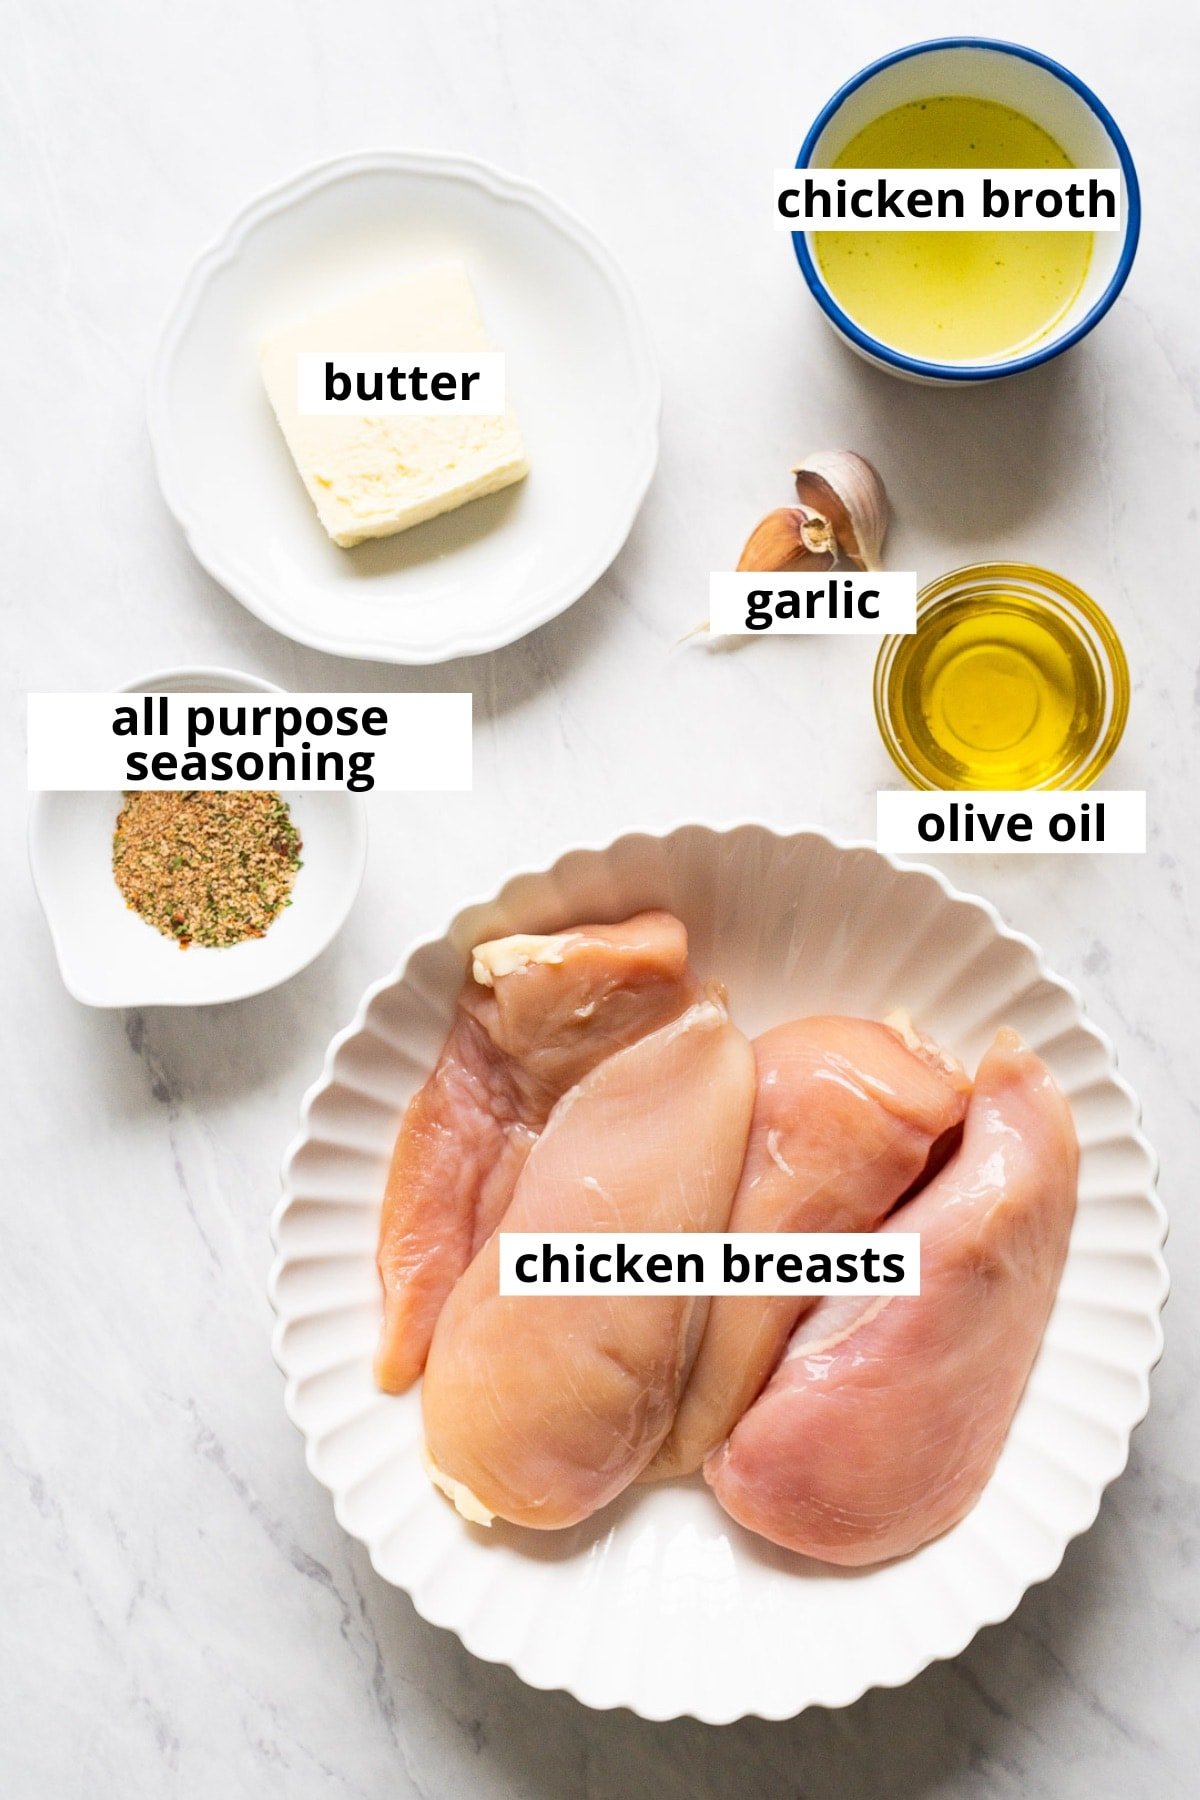 Chicken breasts, all purpose seasoning, olive oil, garlic cloves, butter, chicken broth.